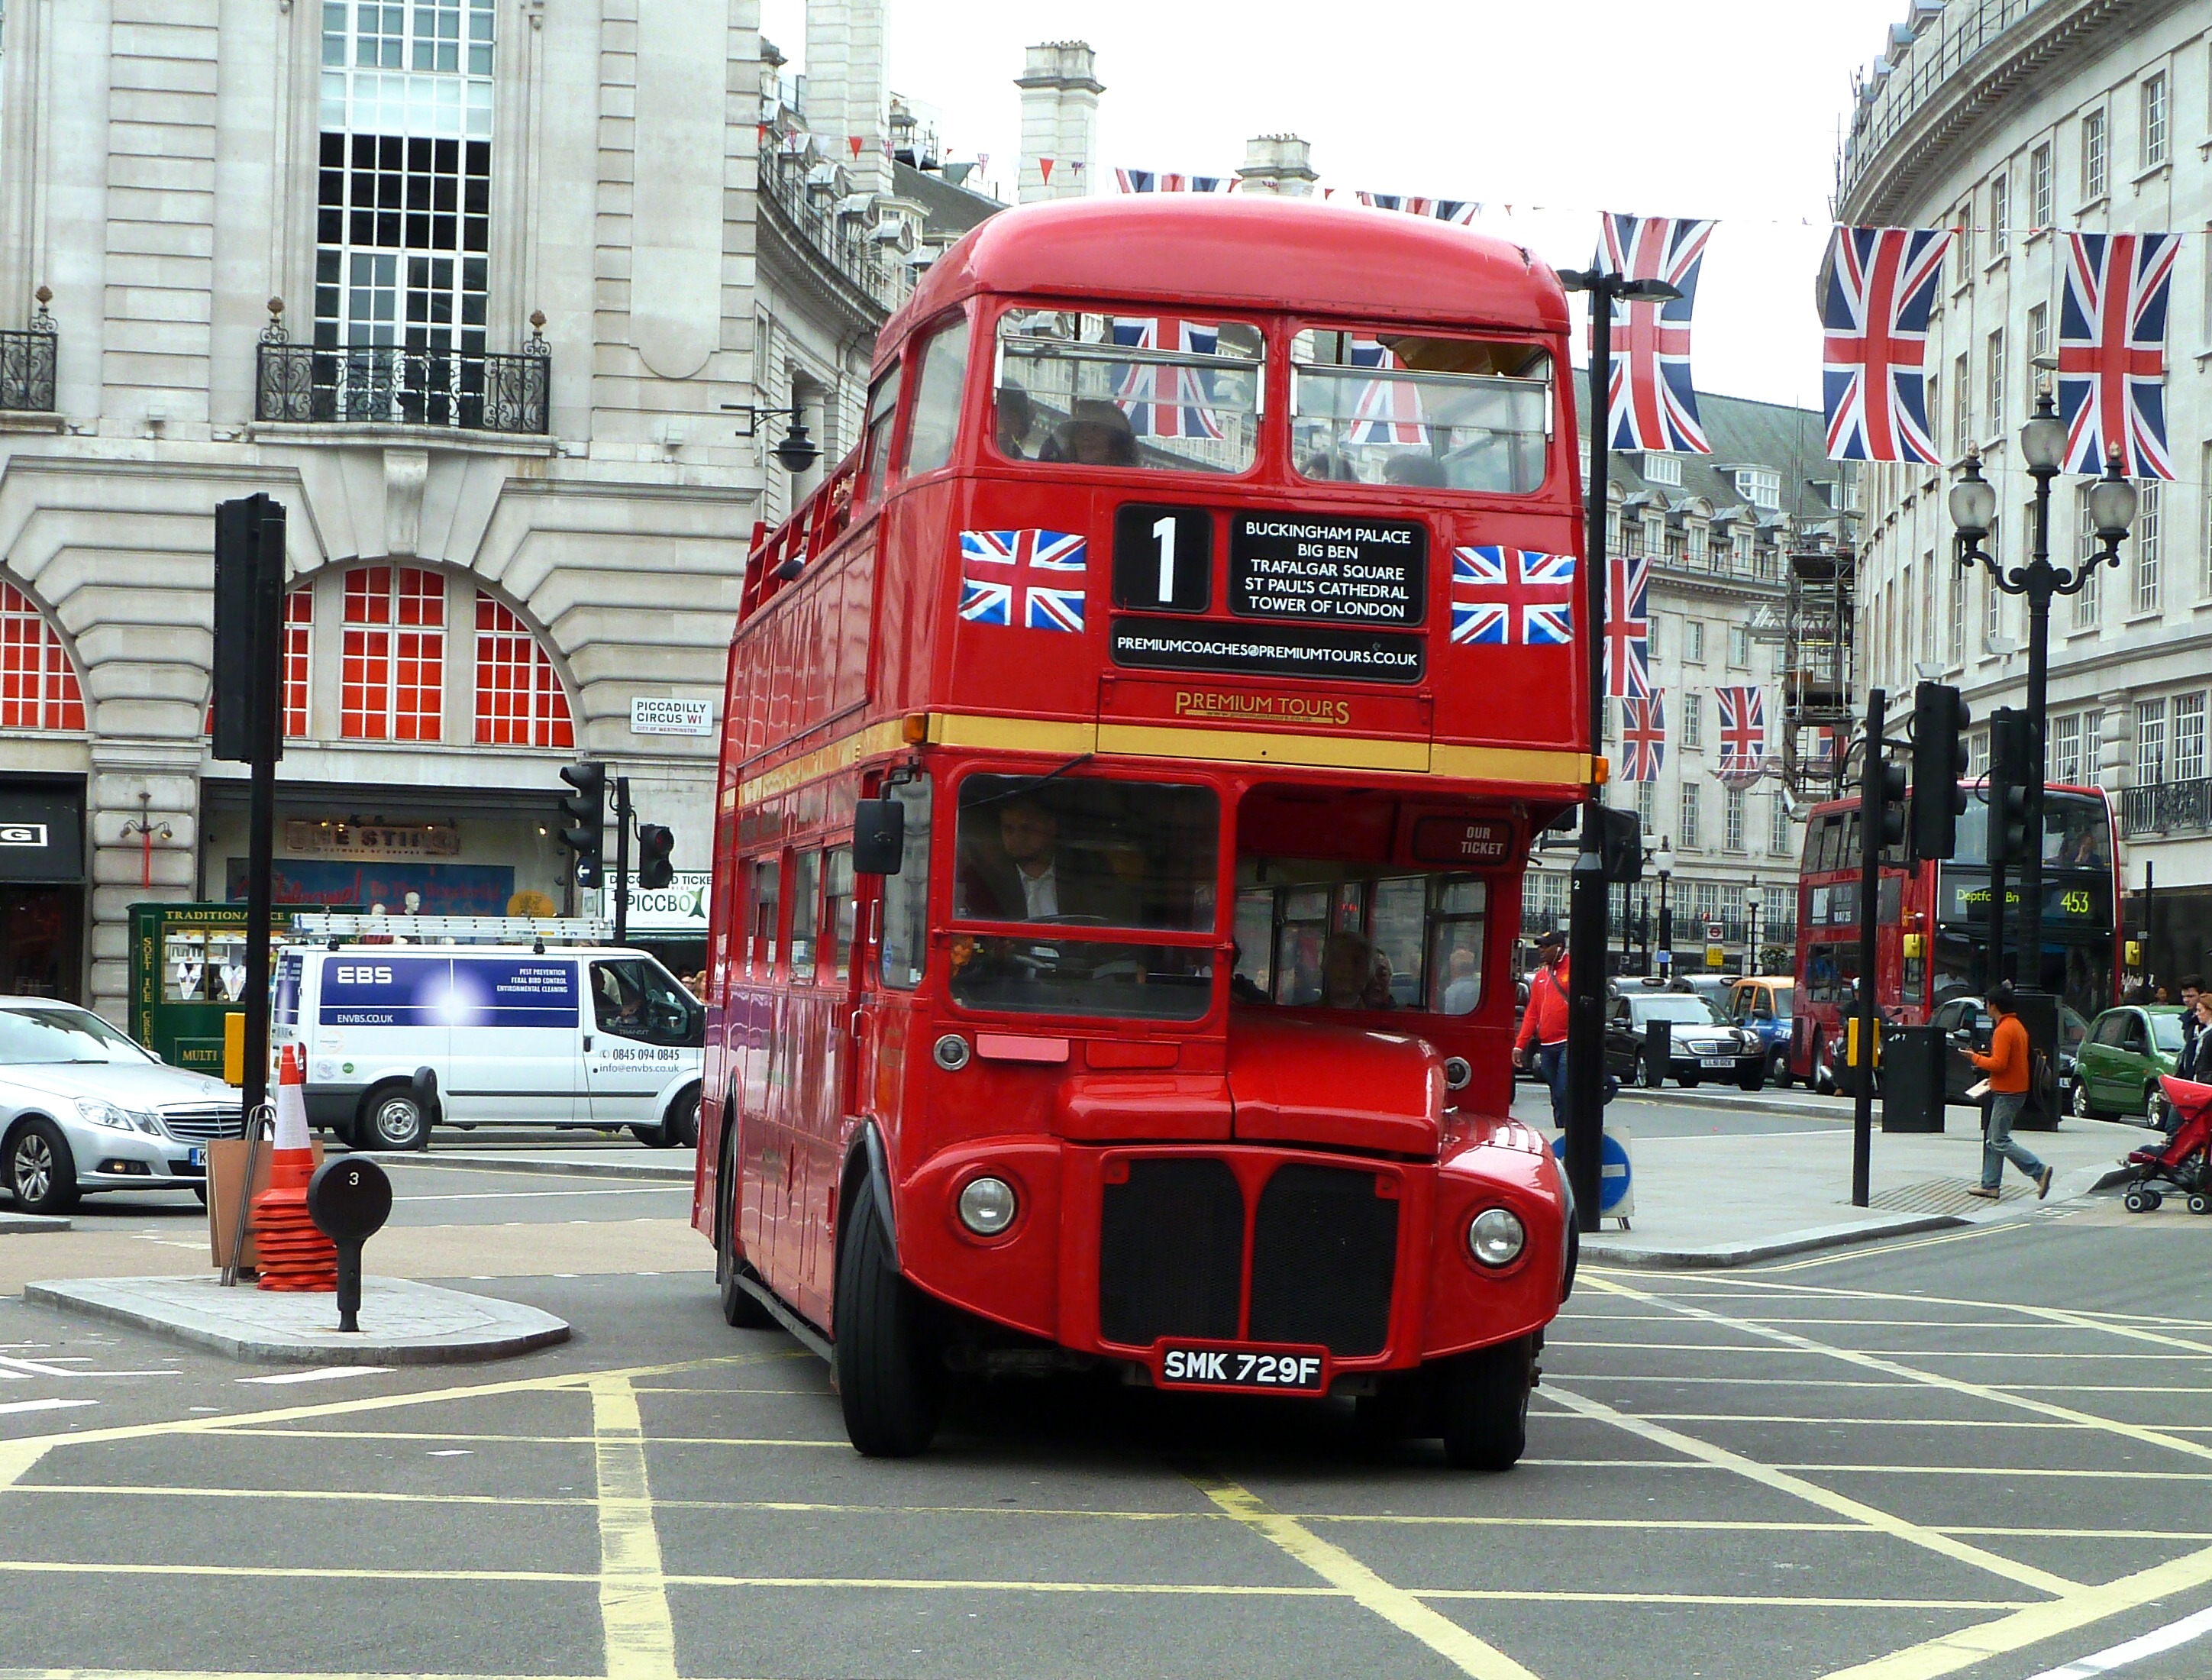 AEC ROUTEMASTER - PREMIUM TOURS London | Flickr - Photo Sharing!